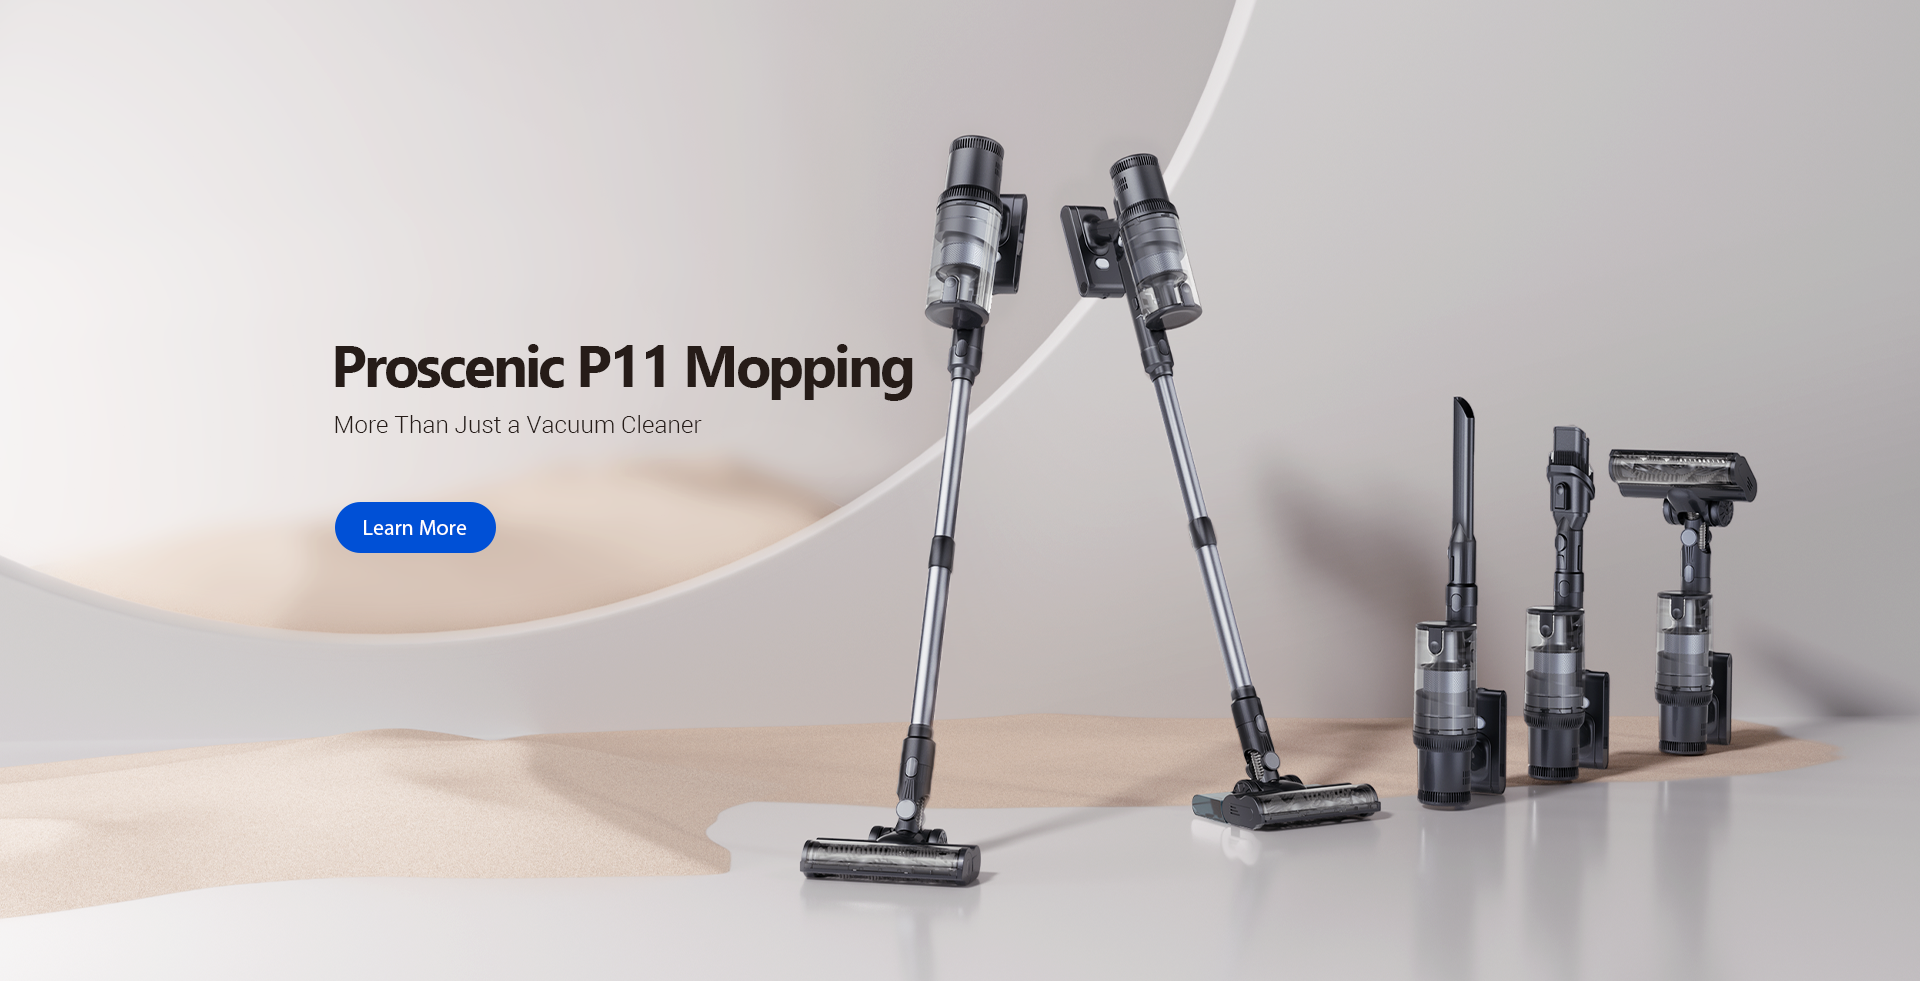 P11 Mopping – Proscenic